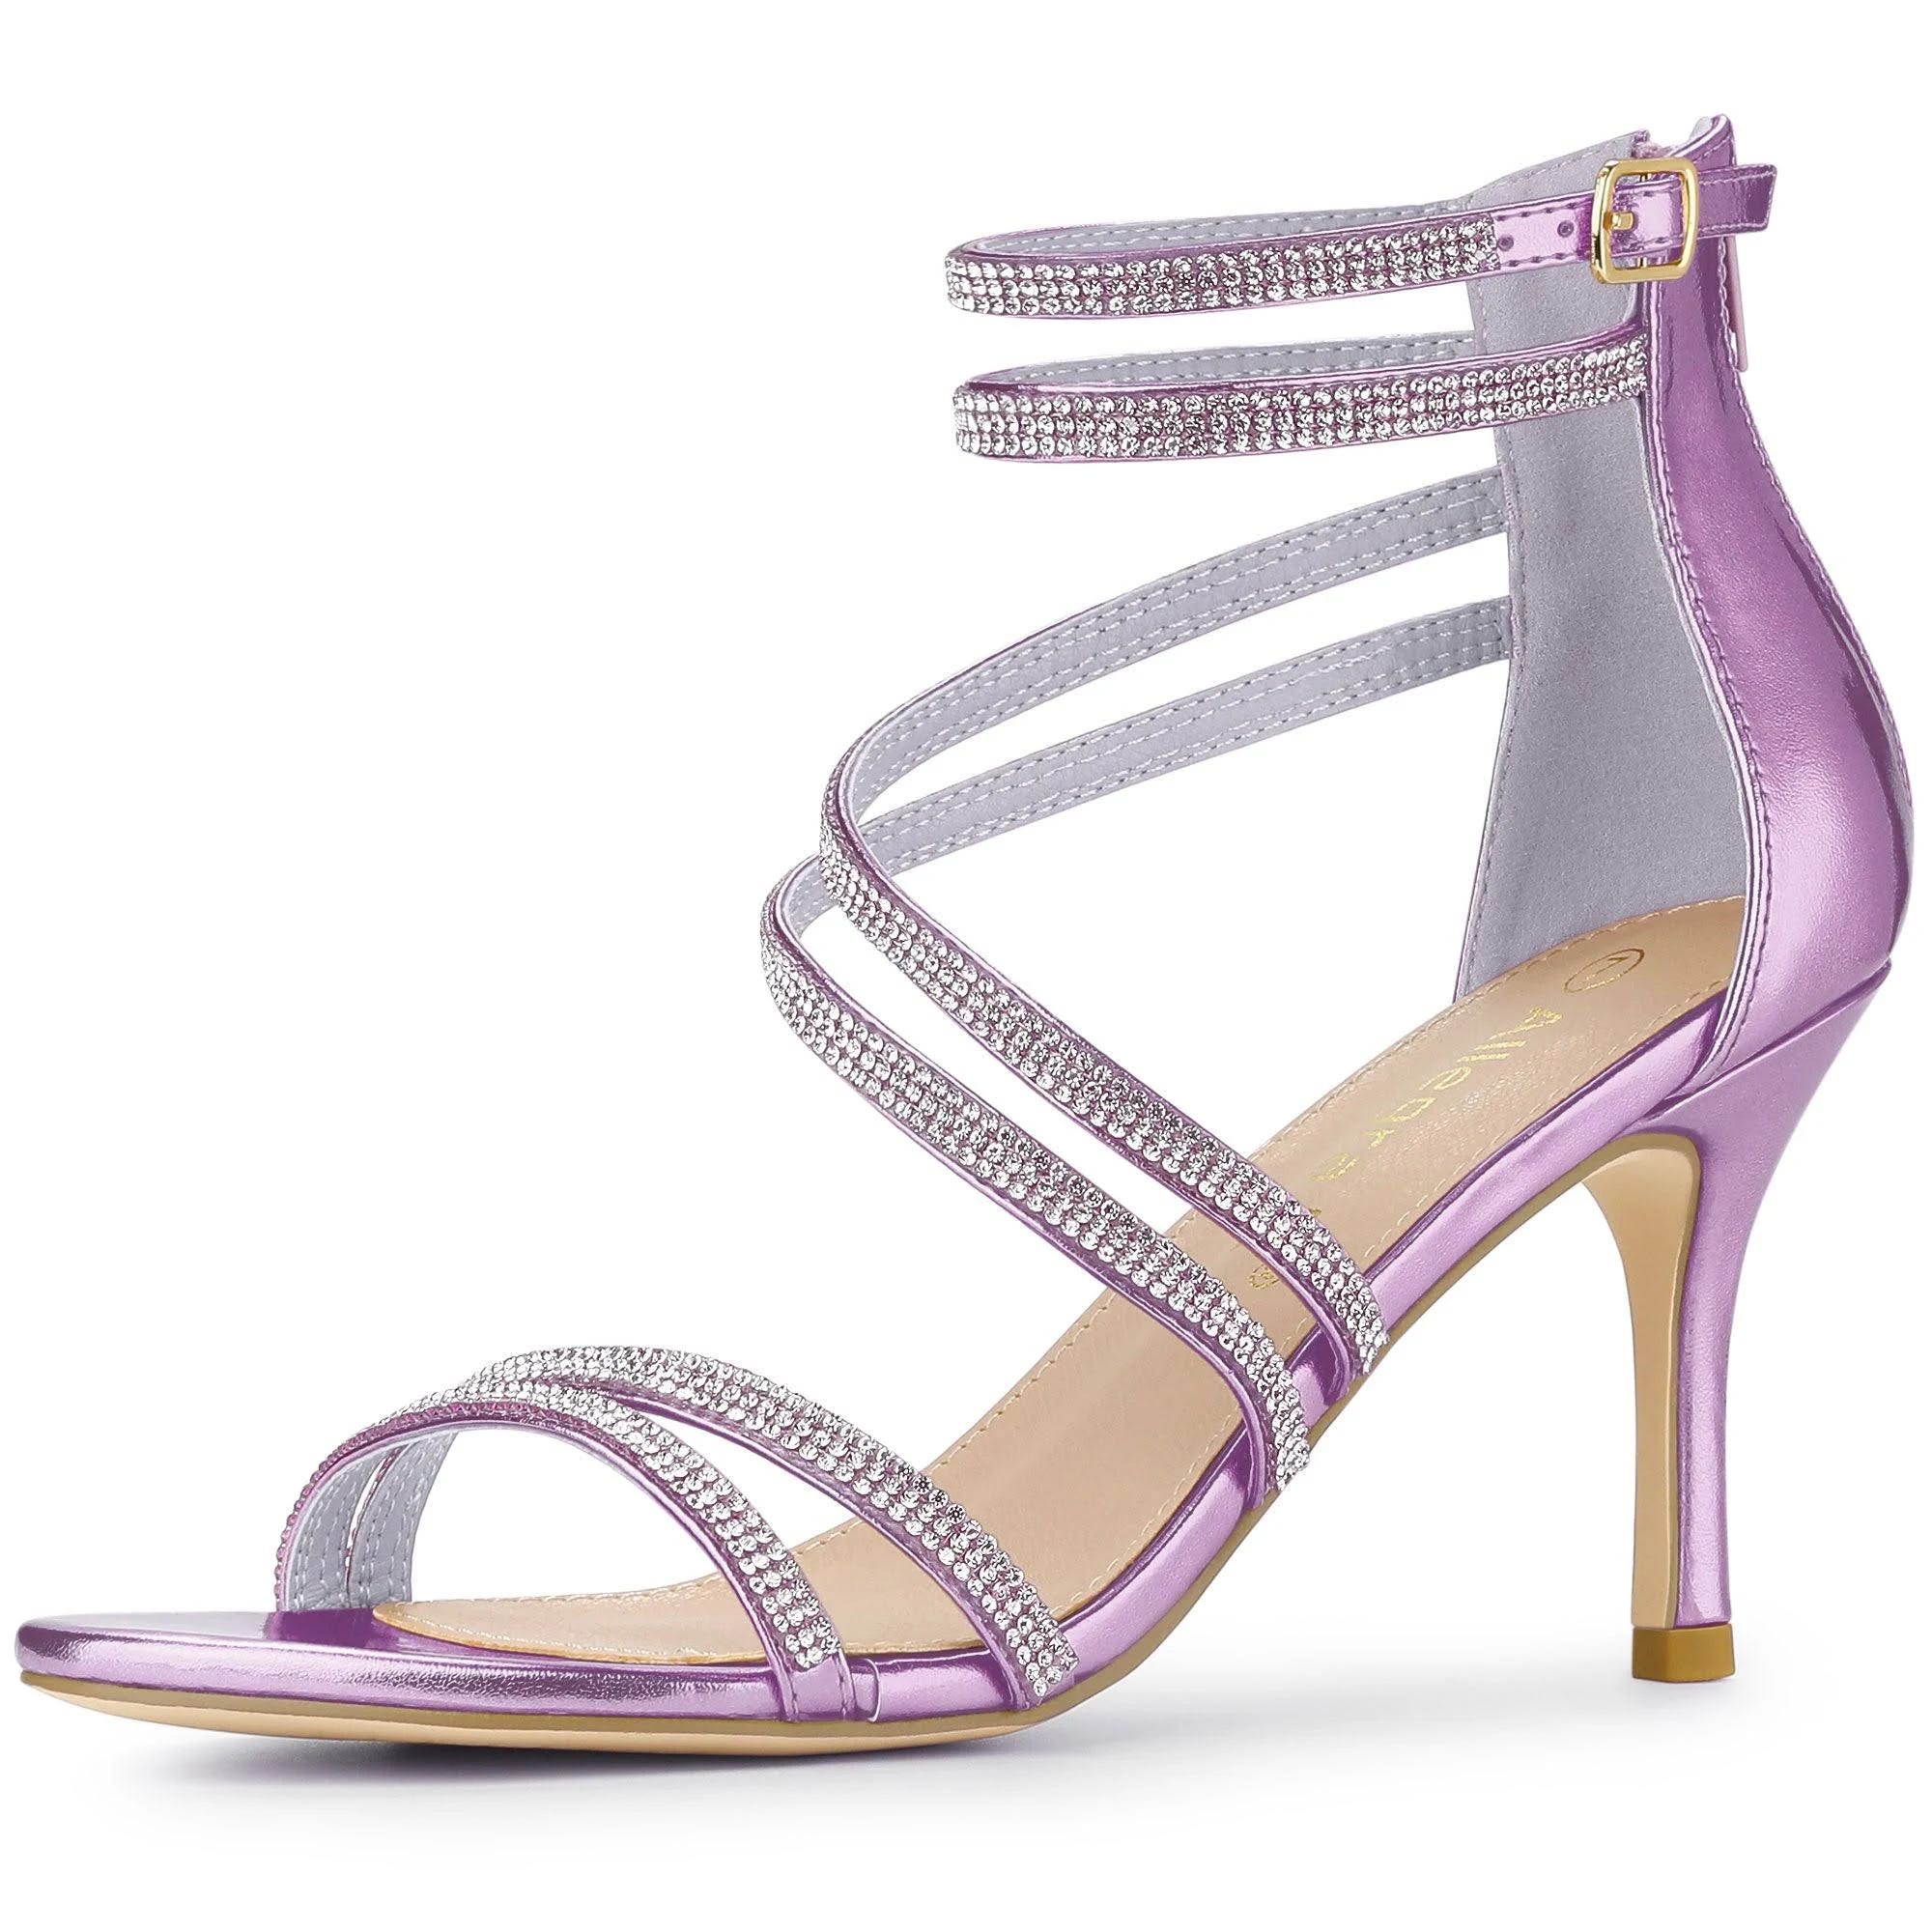 Rhinestone Ankle Strap Stiletto Heels in Purple | Image